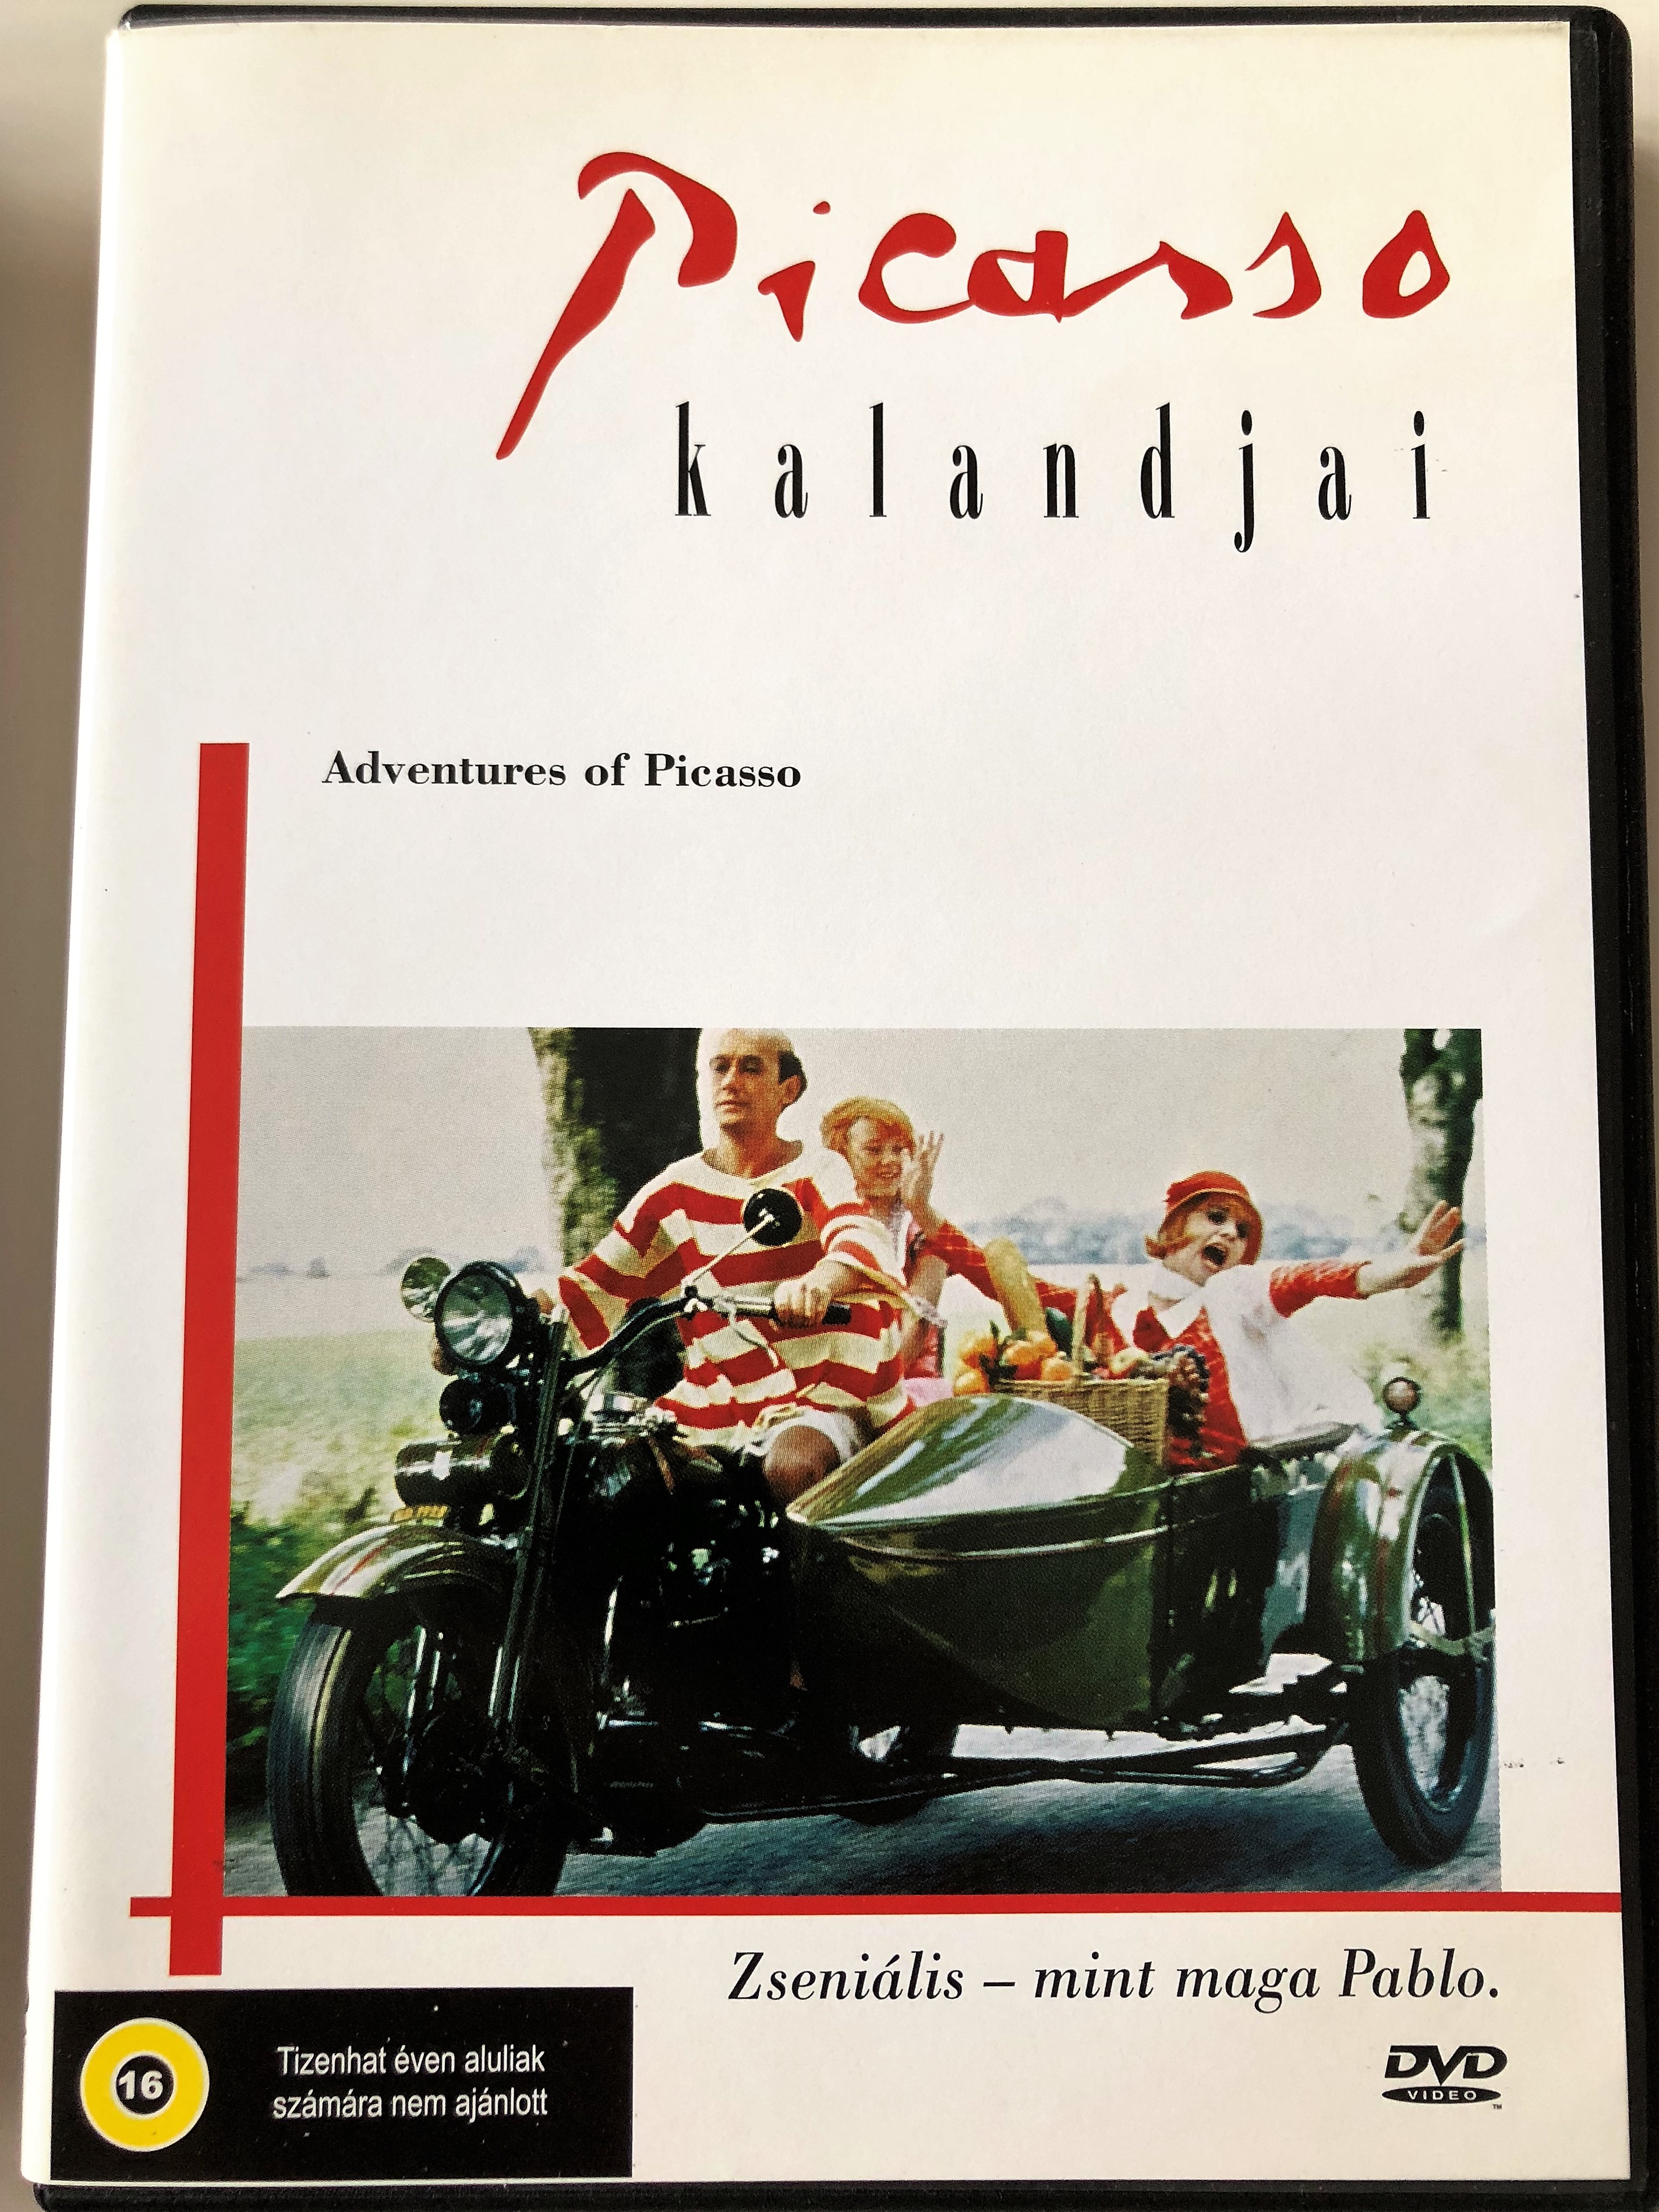 -adventures-of-picasso-picassos-ventyr-dvd-1978-picasso-kalandjai-directed-by-tage-danielsson-starring-g-sta-ekman-hans-alfredson-margaretha-krook-1-.jpg